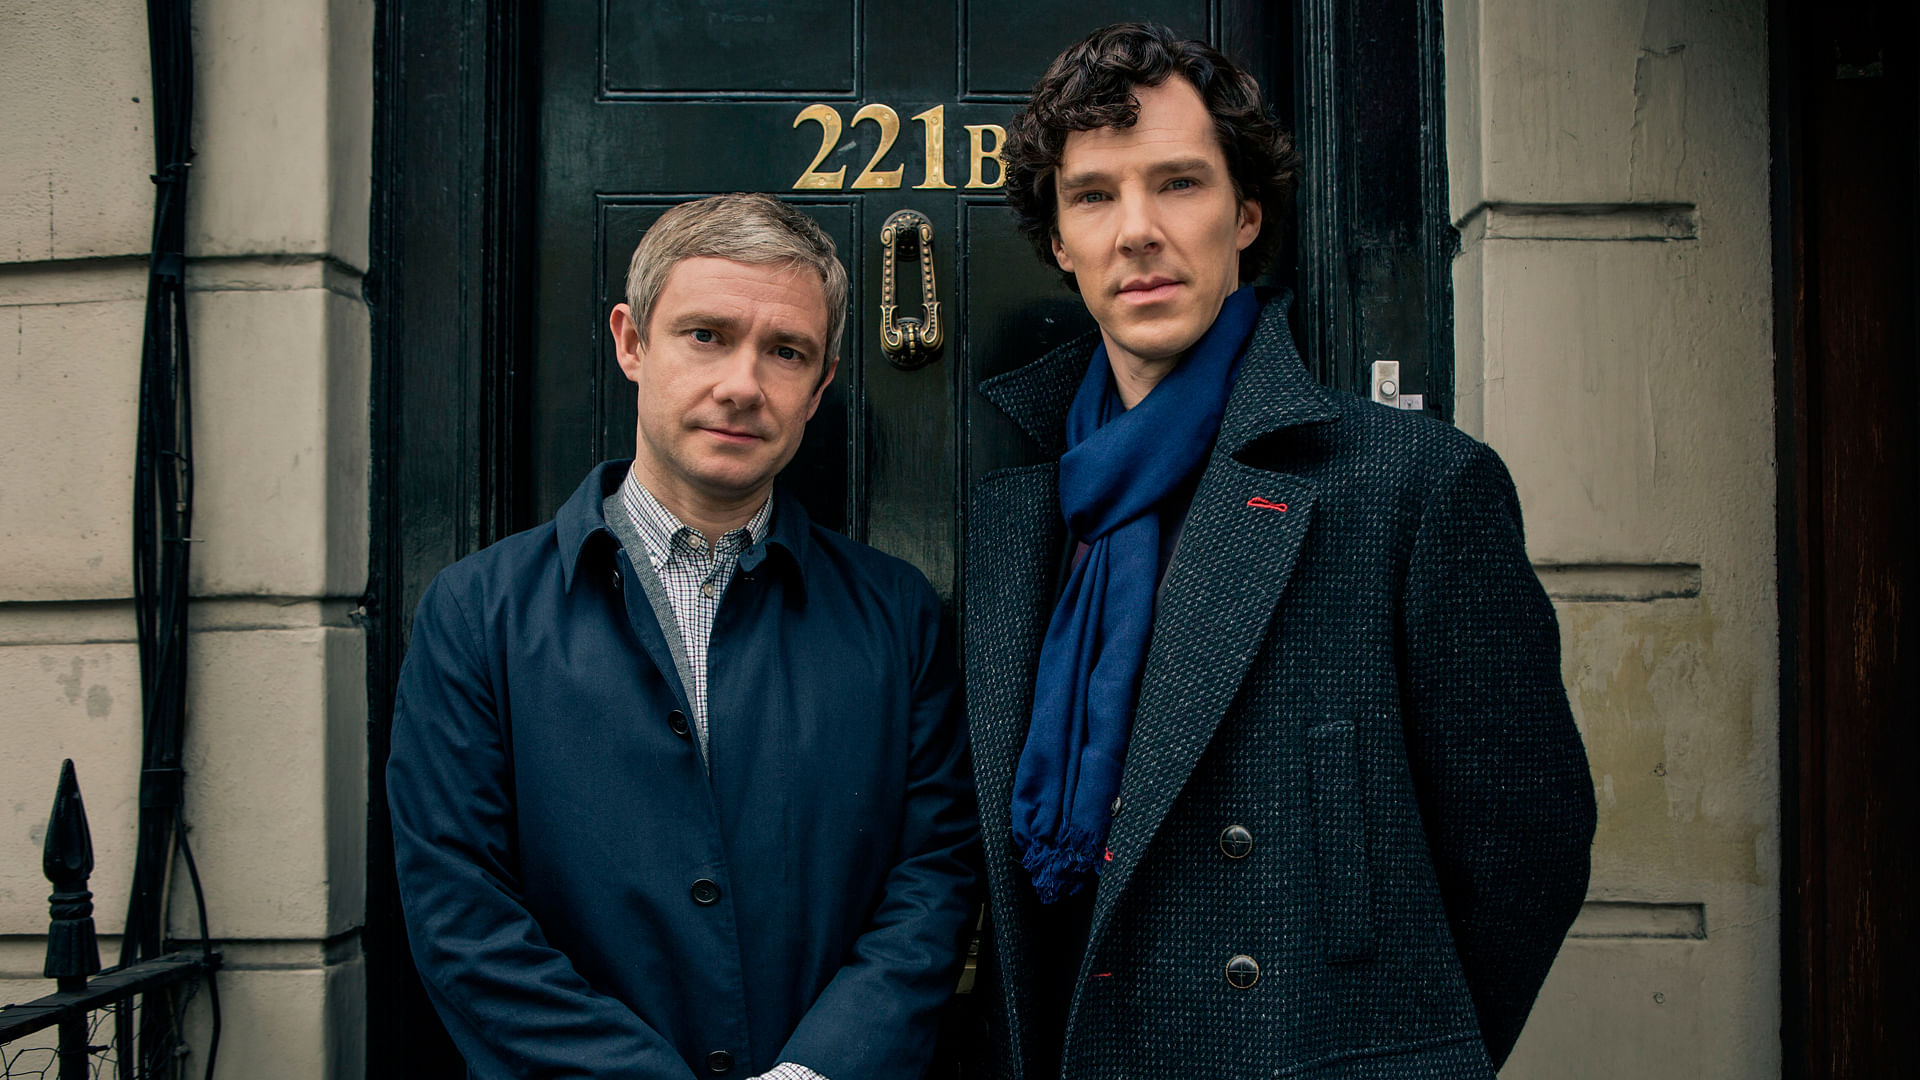 Martin Freeman and Benedict Cumberbatch in a still from Sherlock. (Photo: <a href="http://www.imdb.com/media/rm2962214912/tt1475582?ref_=ttmd_md_pv">IMDB</a>)